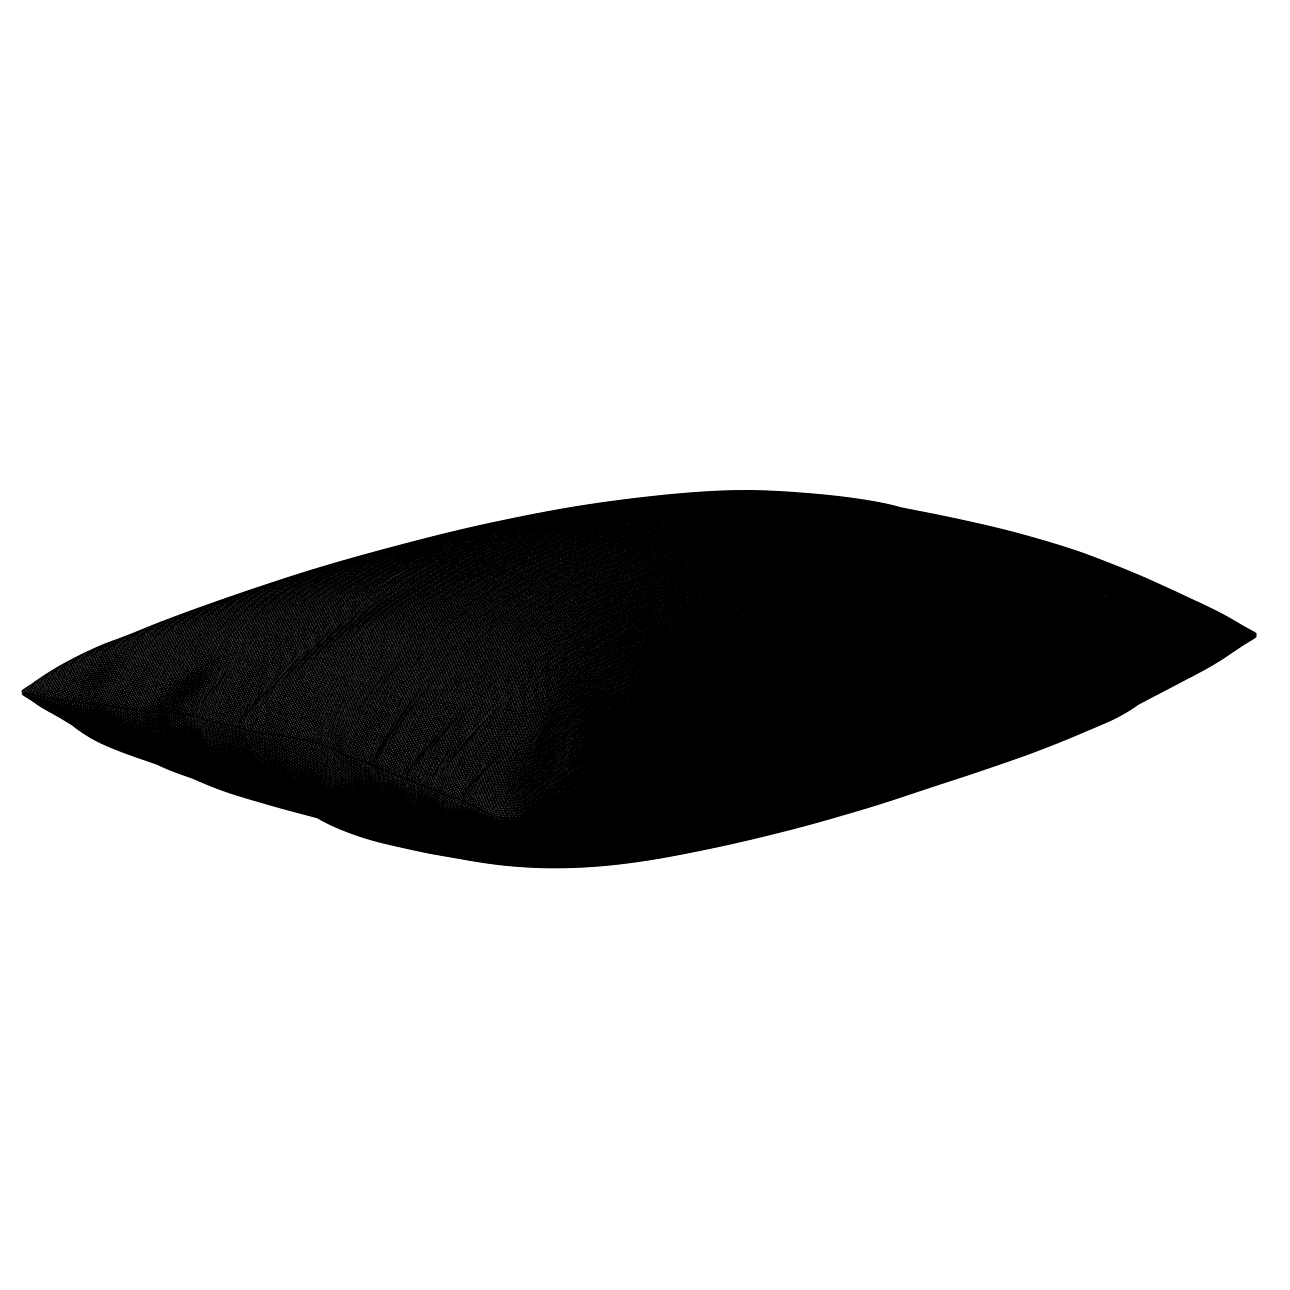 Kissenhülle Kinga rechteckig, schwarz, 47 x 28 cm, Etna (705-00) günstig online kaufen